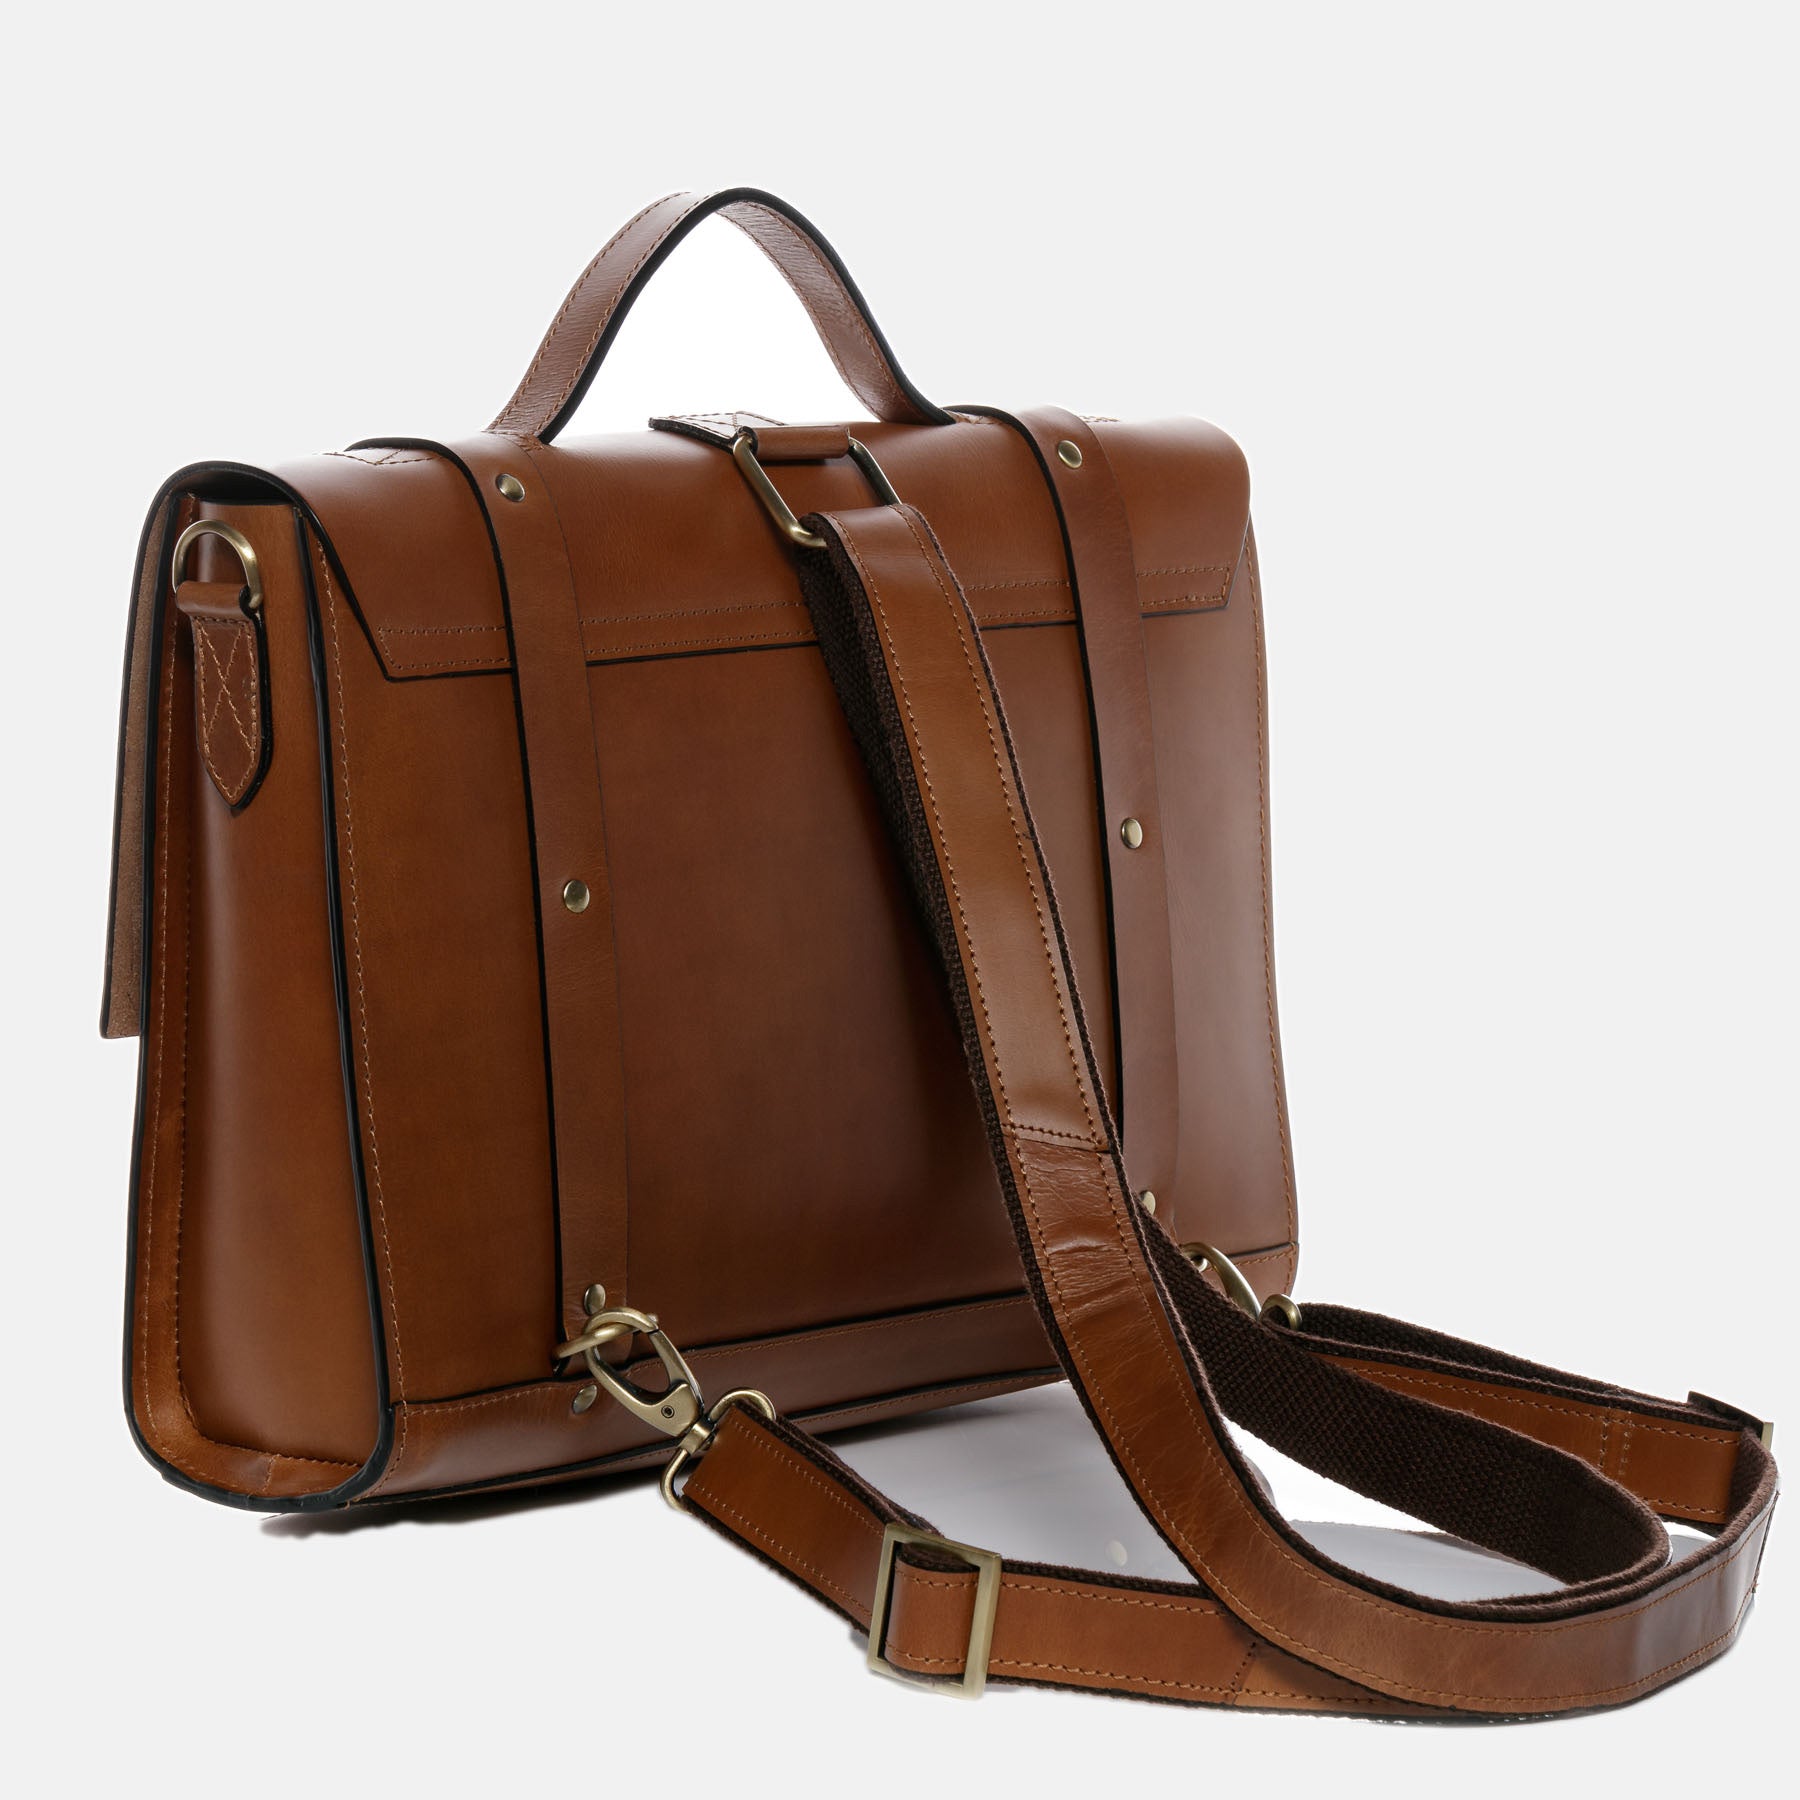 Briefcase BOSTON DUO saddle leather light brown-cognac